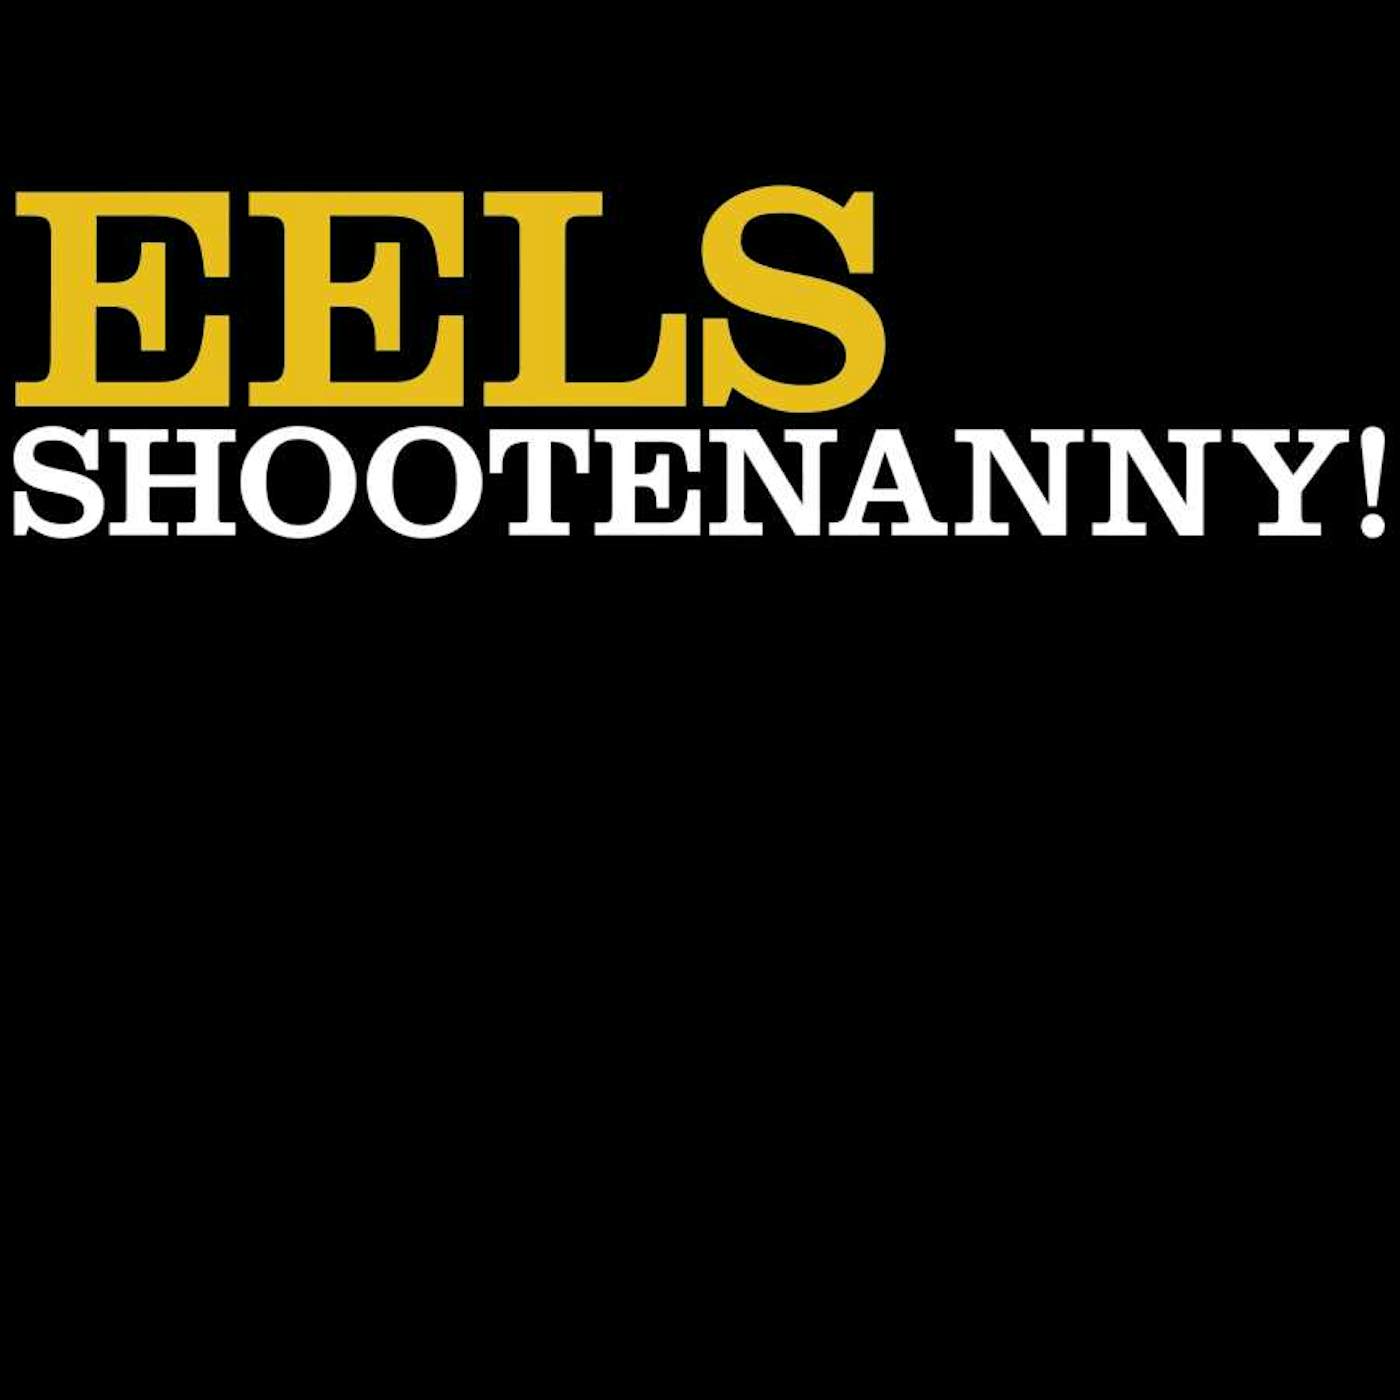 Eels SHOOTENANNY (180G) Vinyl Record